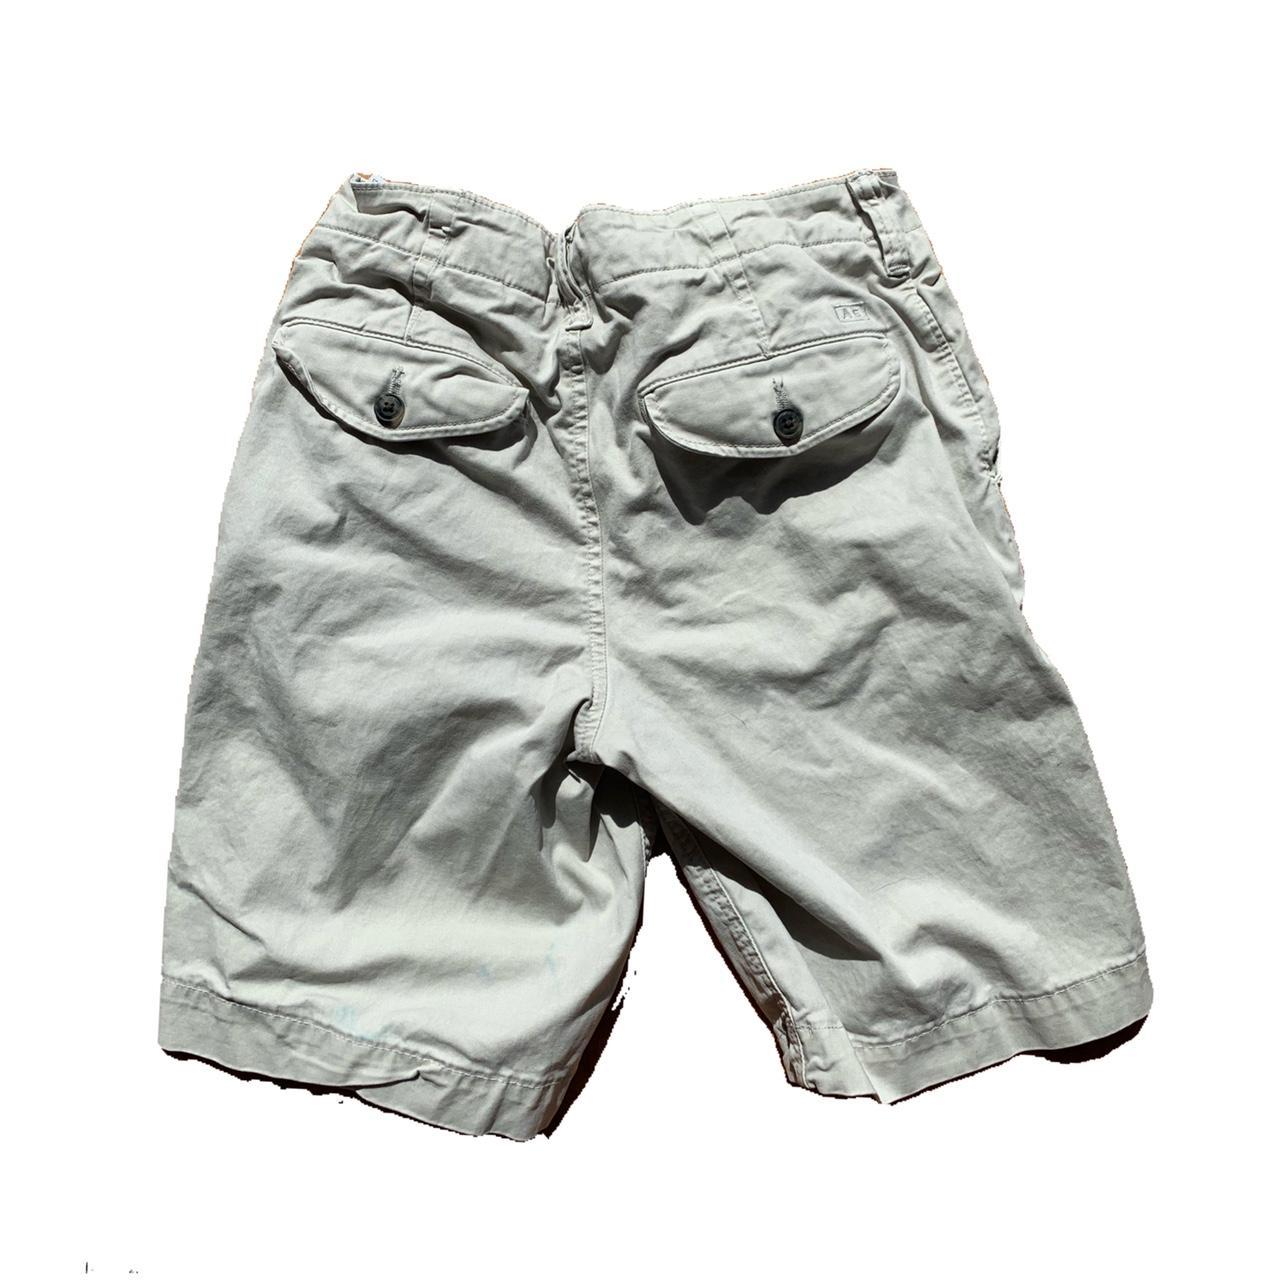 Product Image 2 - Grey cargo shorts

Size 26
10/10 condition
Us